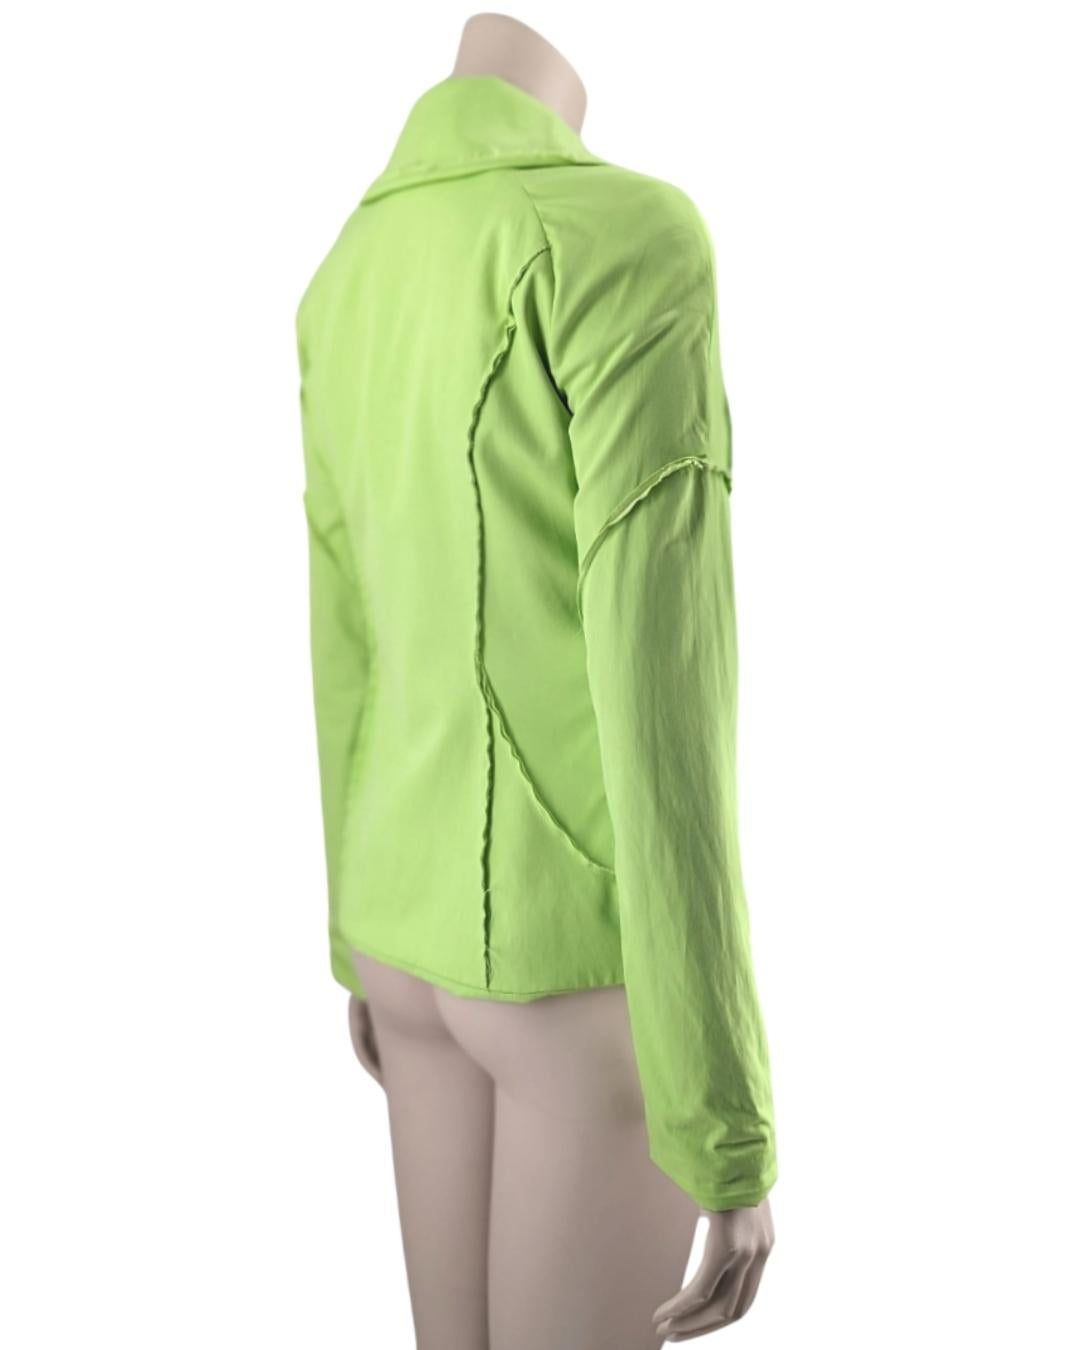 Mugler Acid Green Jacket with lettuce edges.
Circa 1990s.

. Fitted design silhouette
· Deep V-neck
· Lettuce edges

Fits  S, M 
Tag label 38FR

Flat measurements : 

pit to pit : 42 cm
Bust : 40 cm
Length : 62 cm
Sleeves : 62 cm
Waist : 36